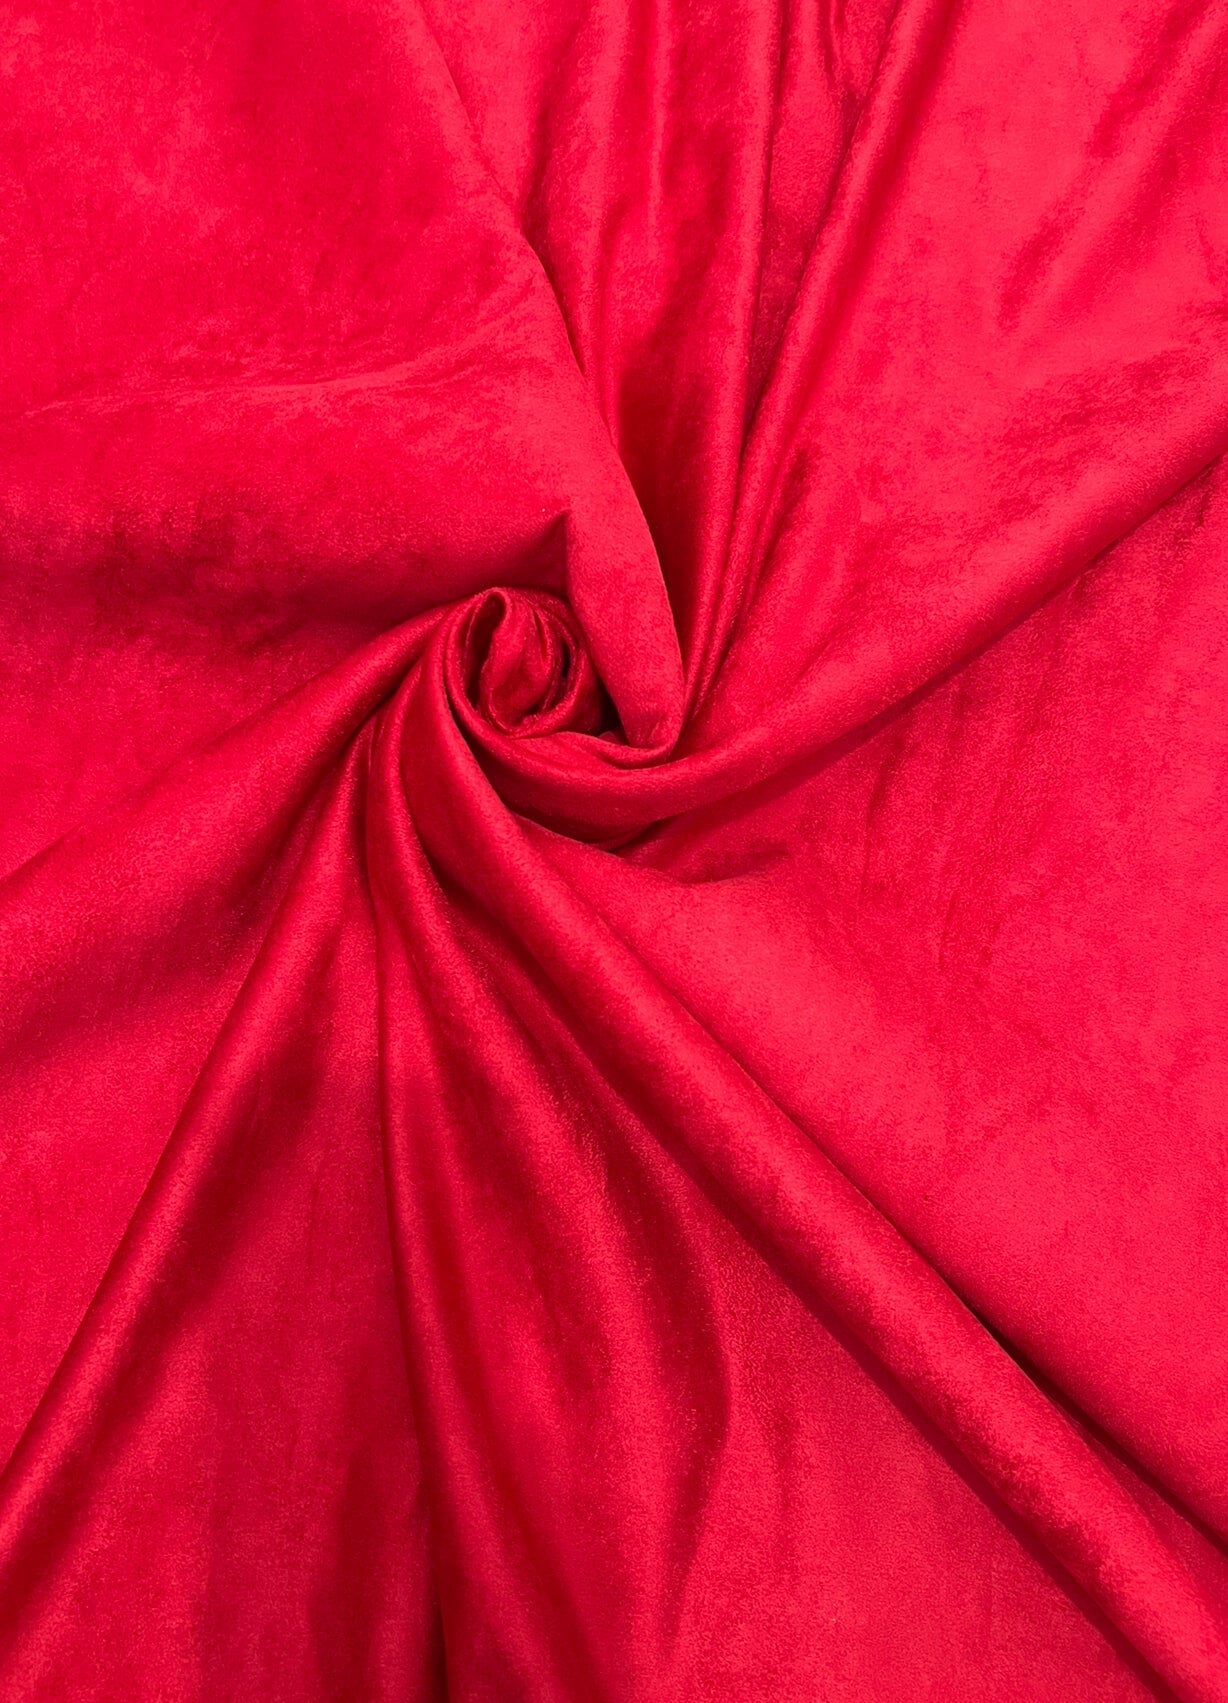 red microsuede, dark red microsuede, light red microsuede, premium microsuede, microsuede for sofa, microsuede for jackets, microsuede in low price, microsuede on discount, microsuede on sale, microsuede for apparels, microsuede for furniture